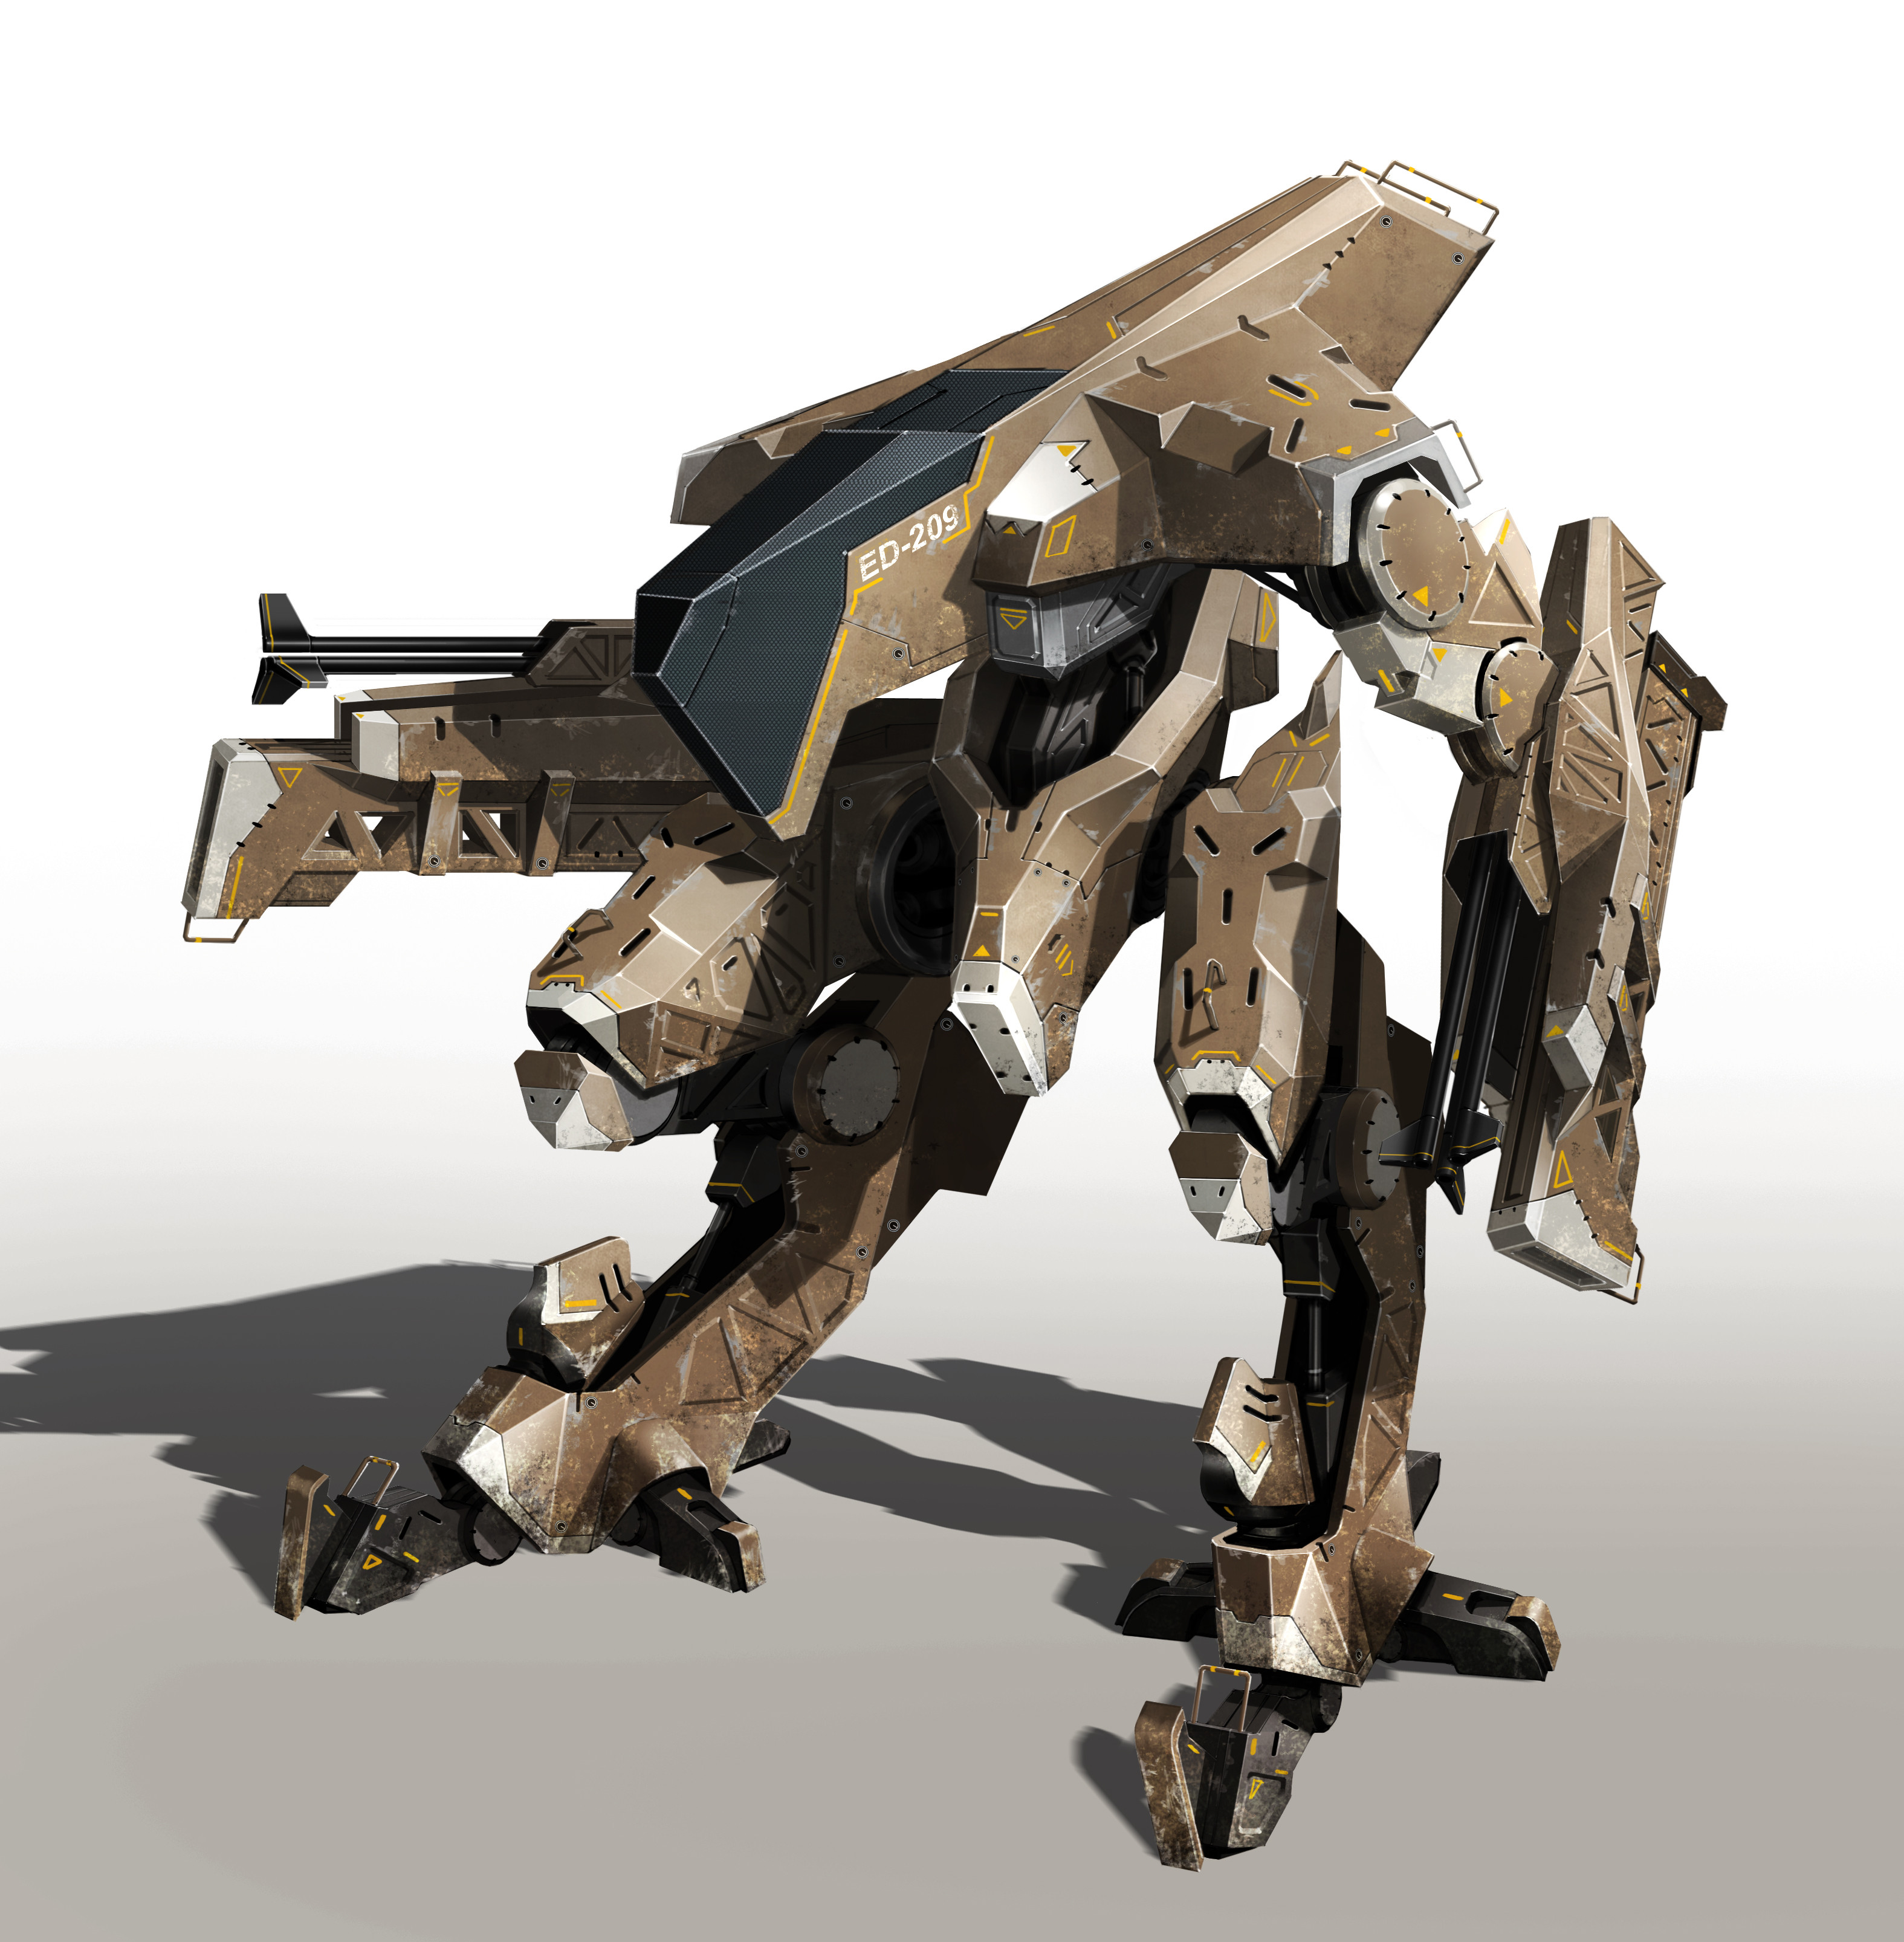 ED-209 redesign (pre Robocop reboot)